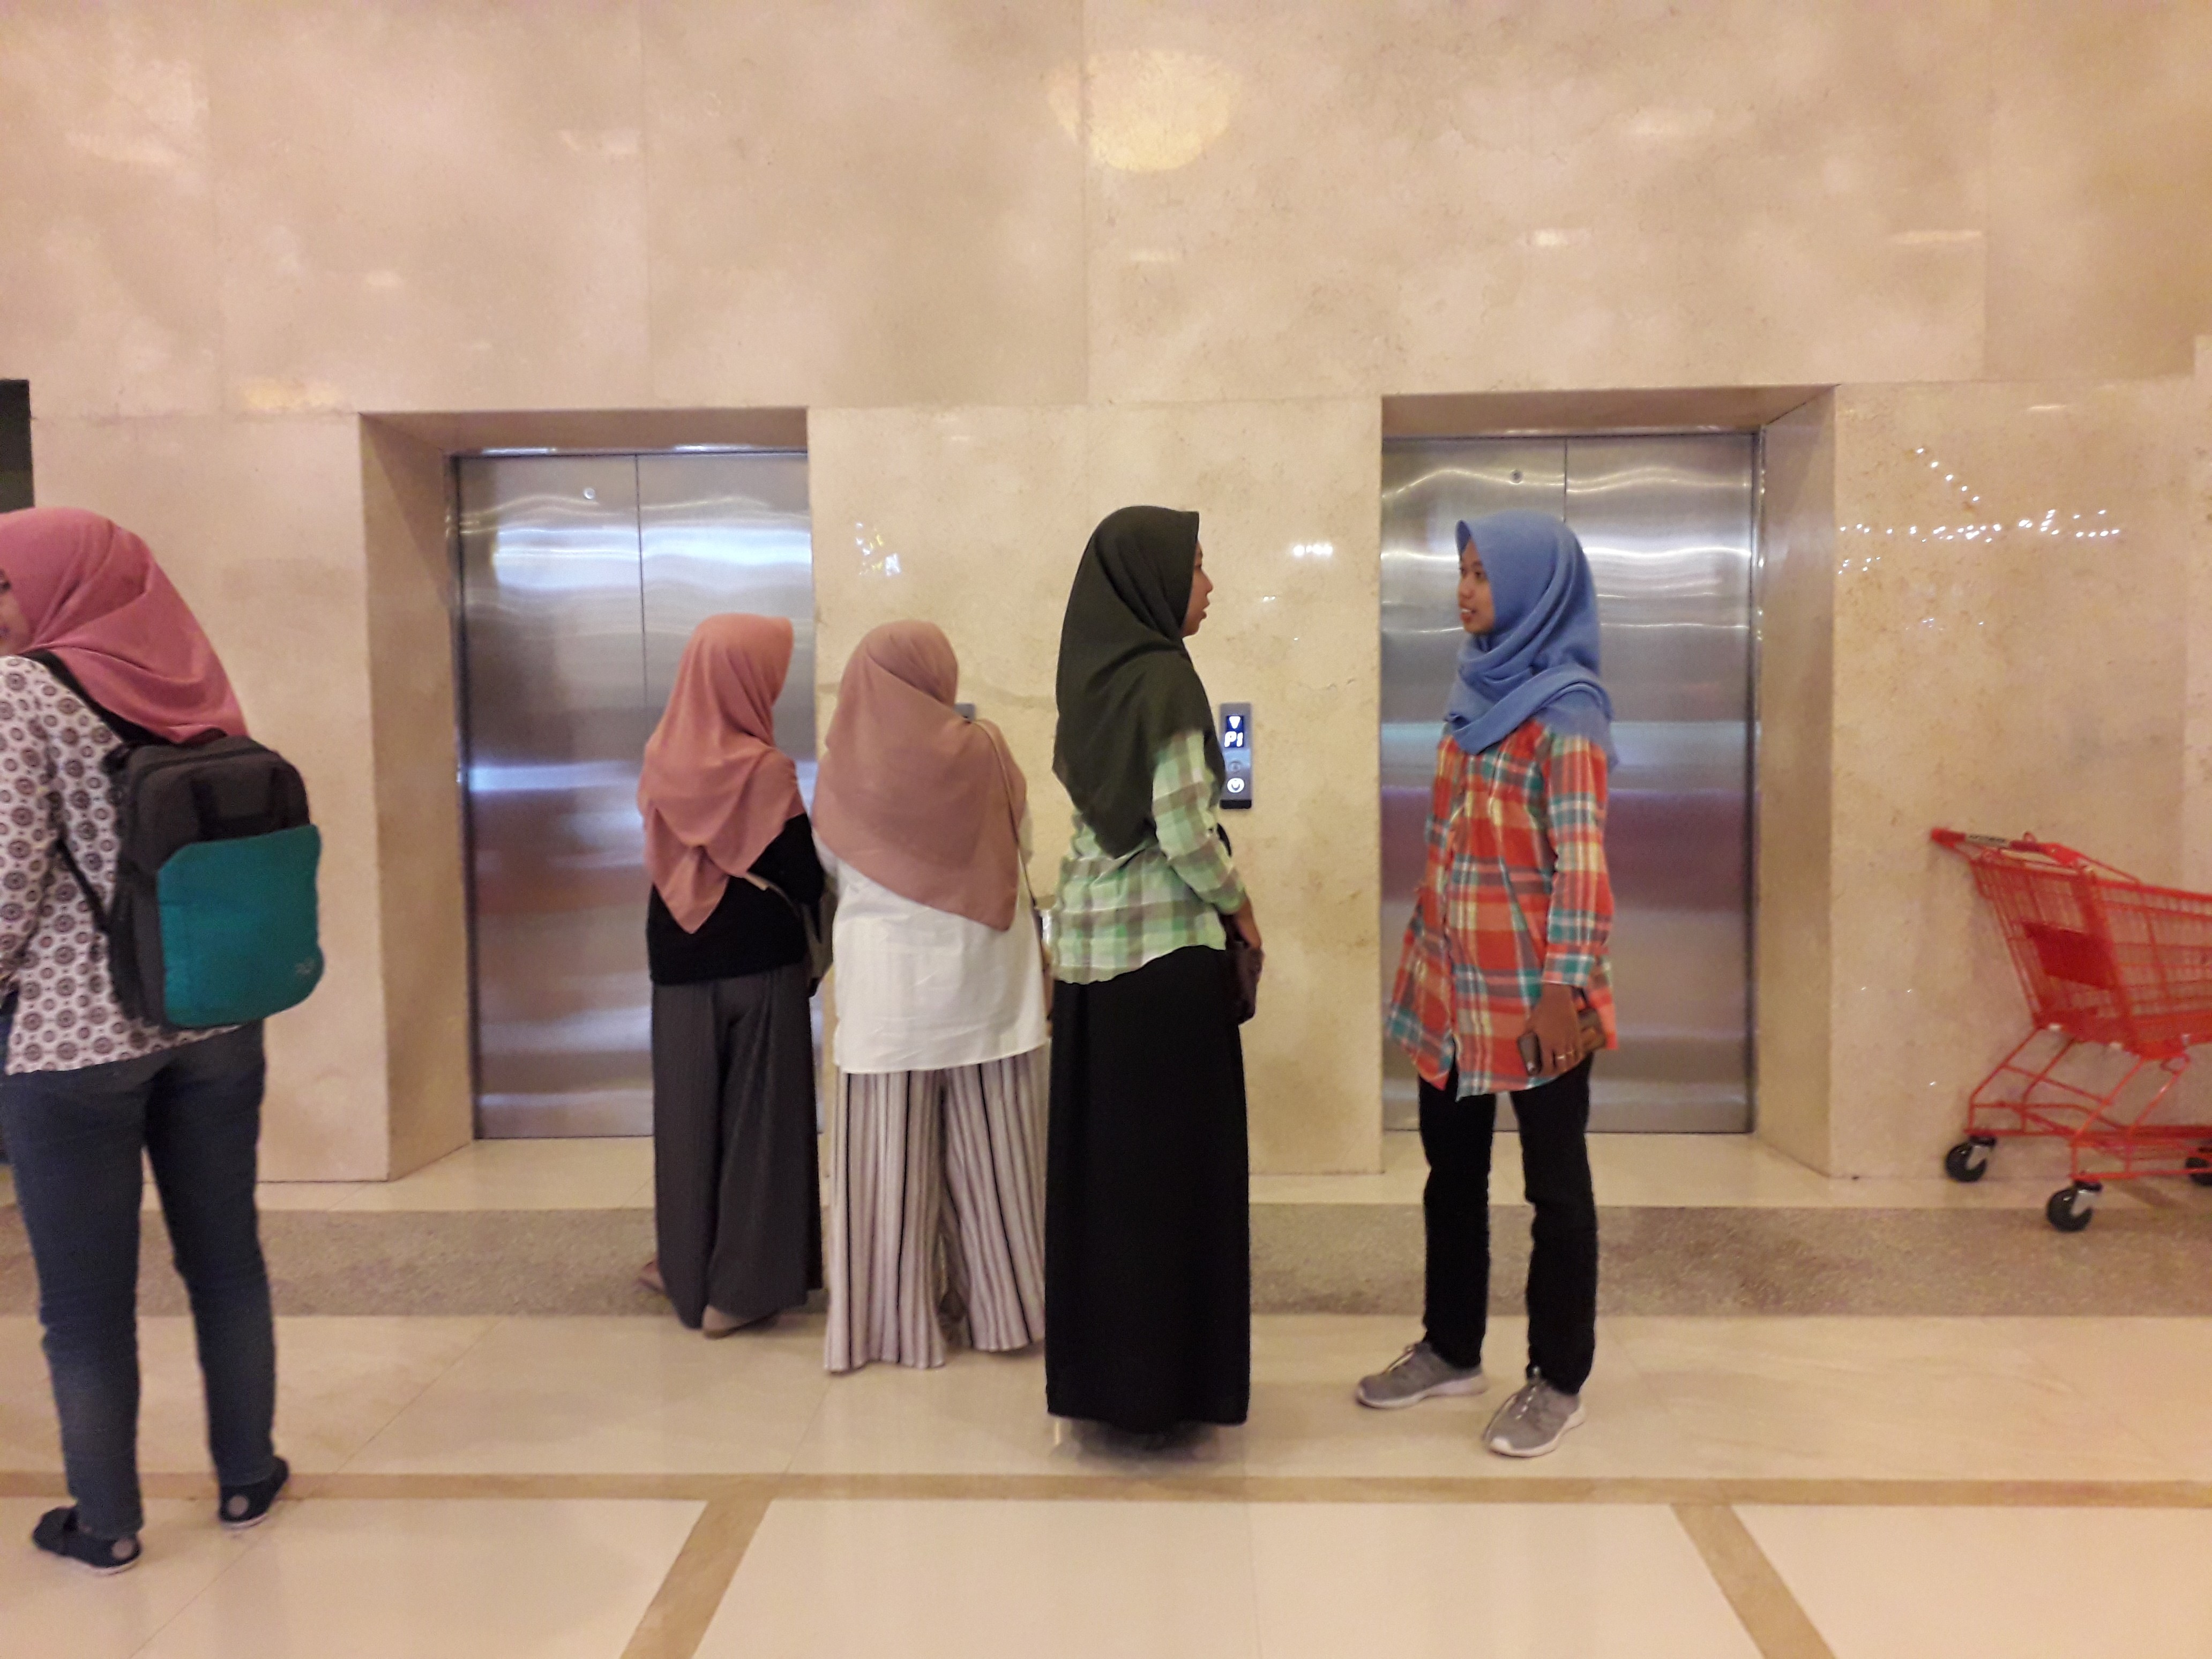 Lift Sleman City Mall (c) Siti Hanifah/Travelingyuk